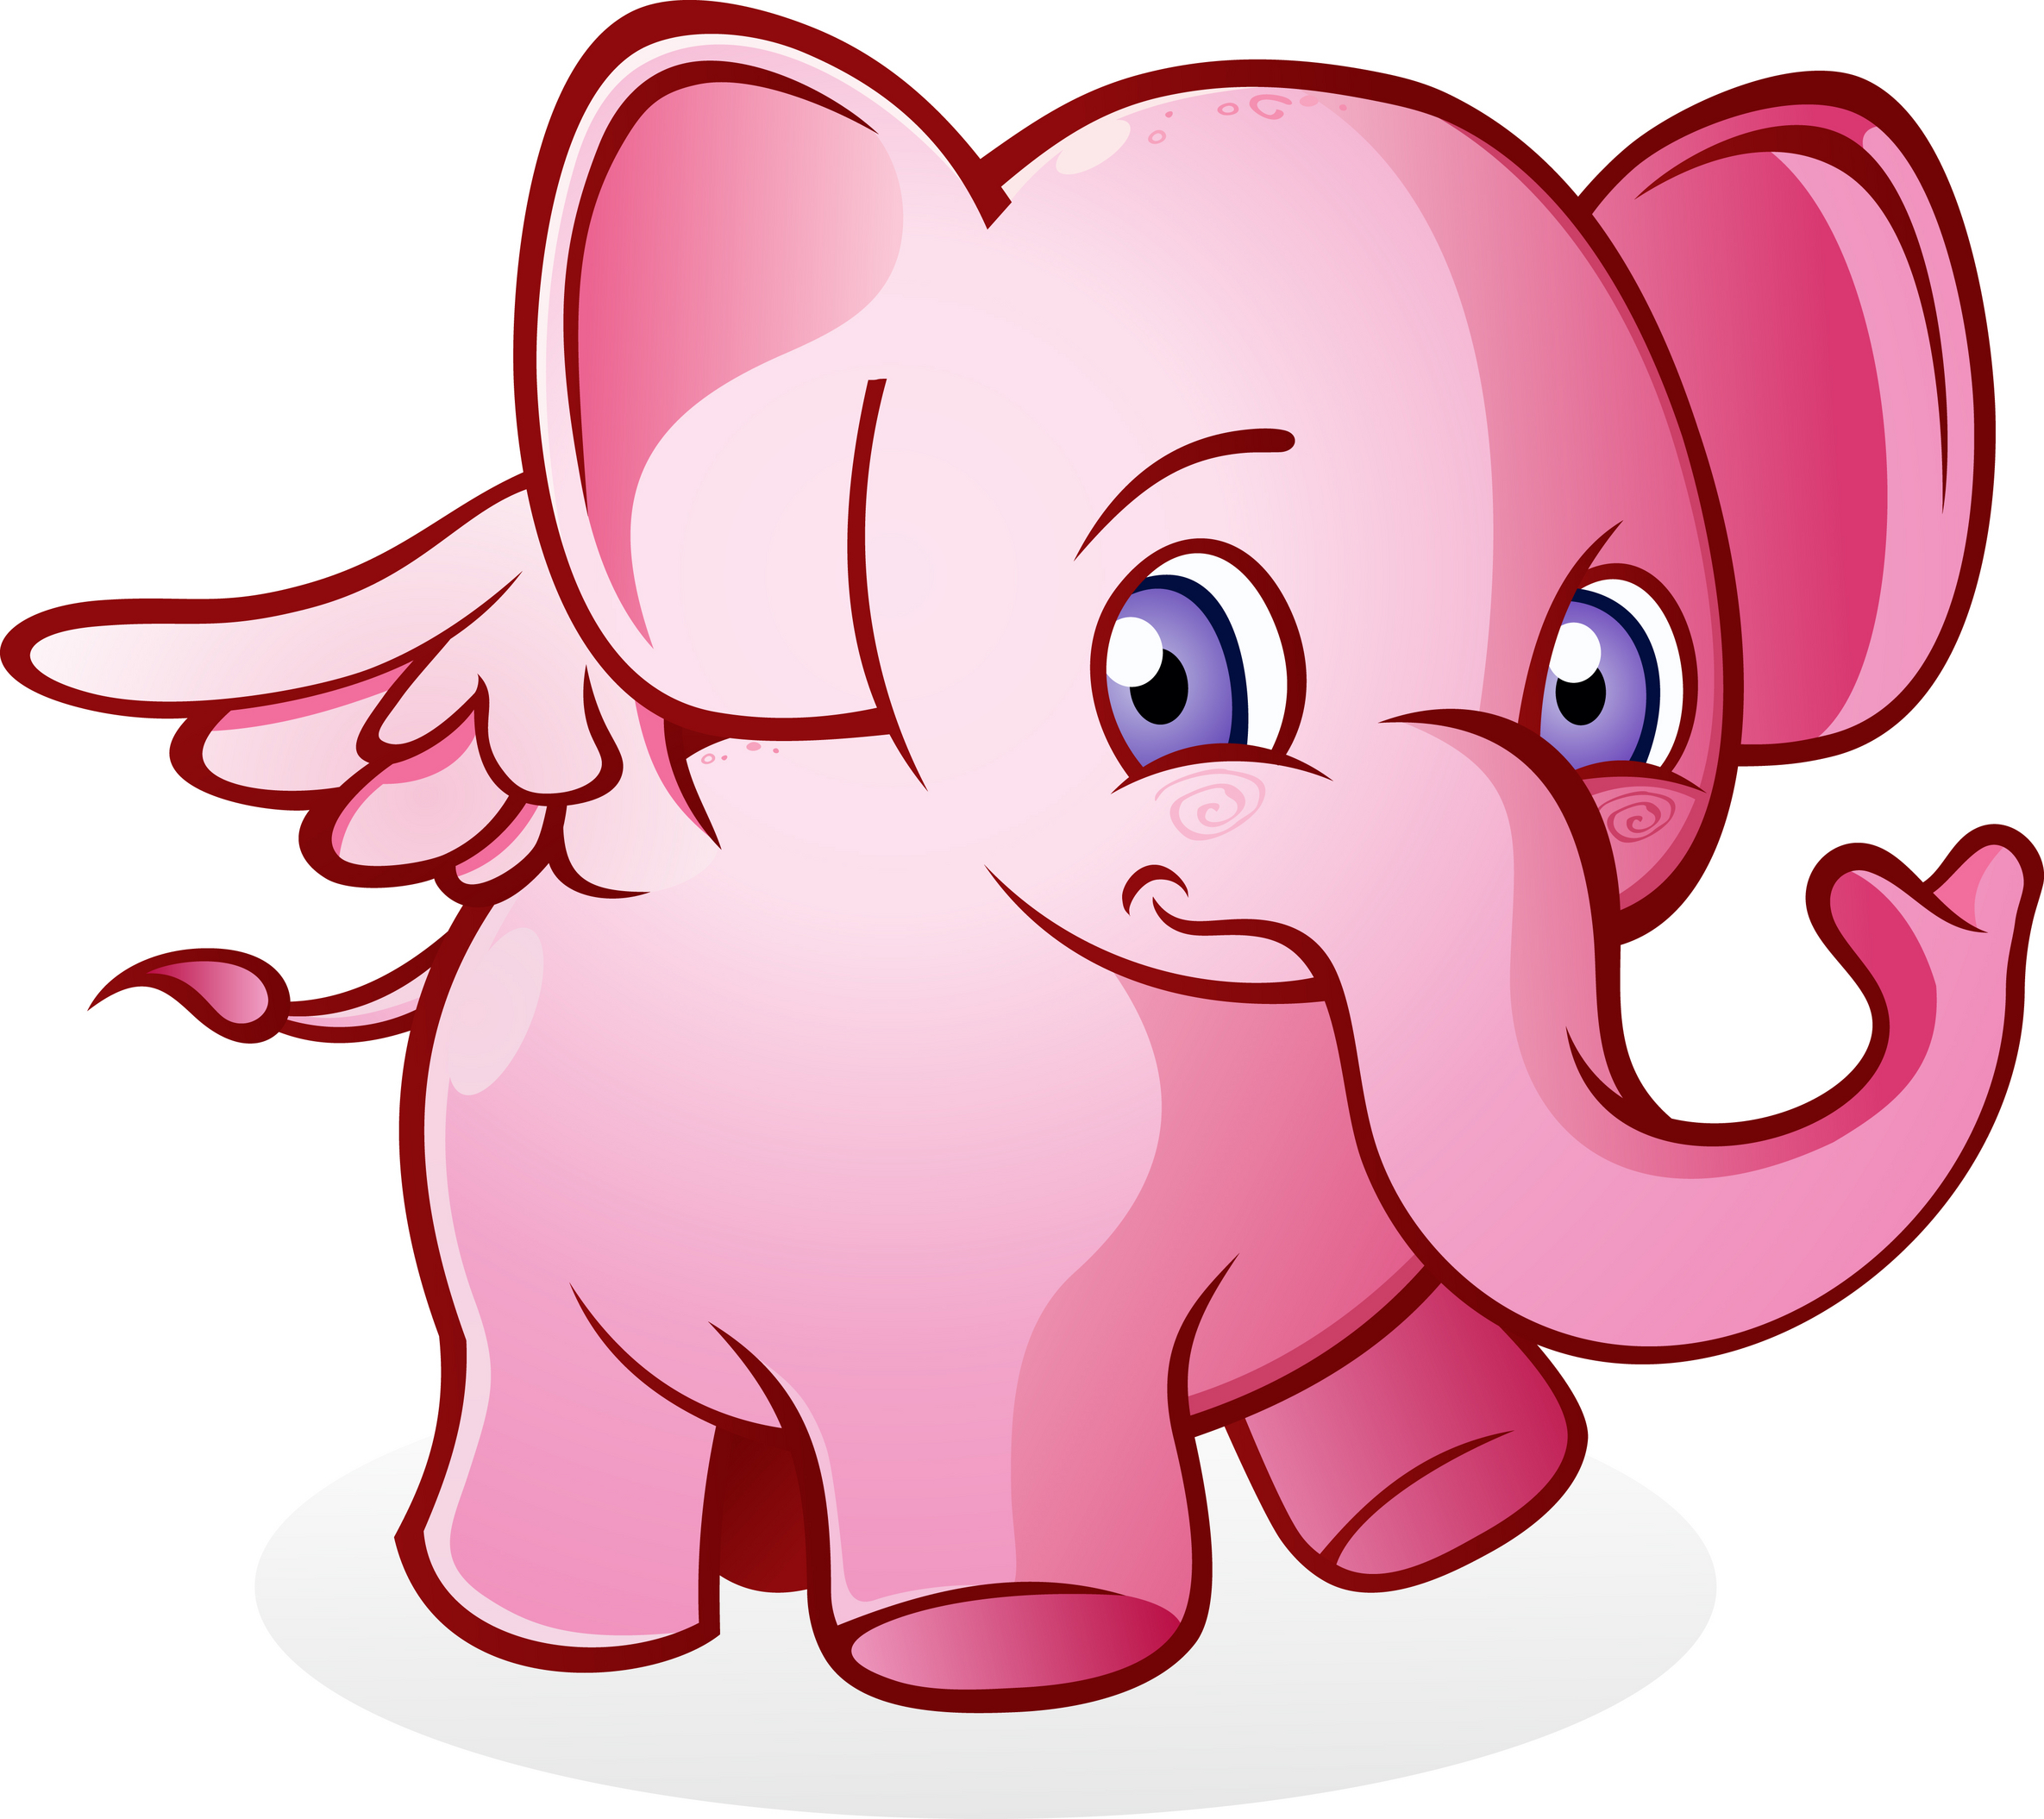 Pink elephants and trauma recovery | Trauma Recovery Lab